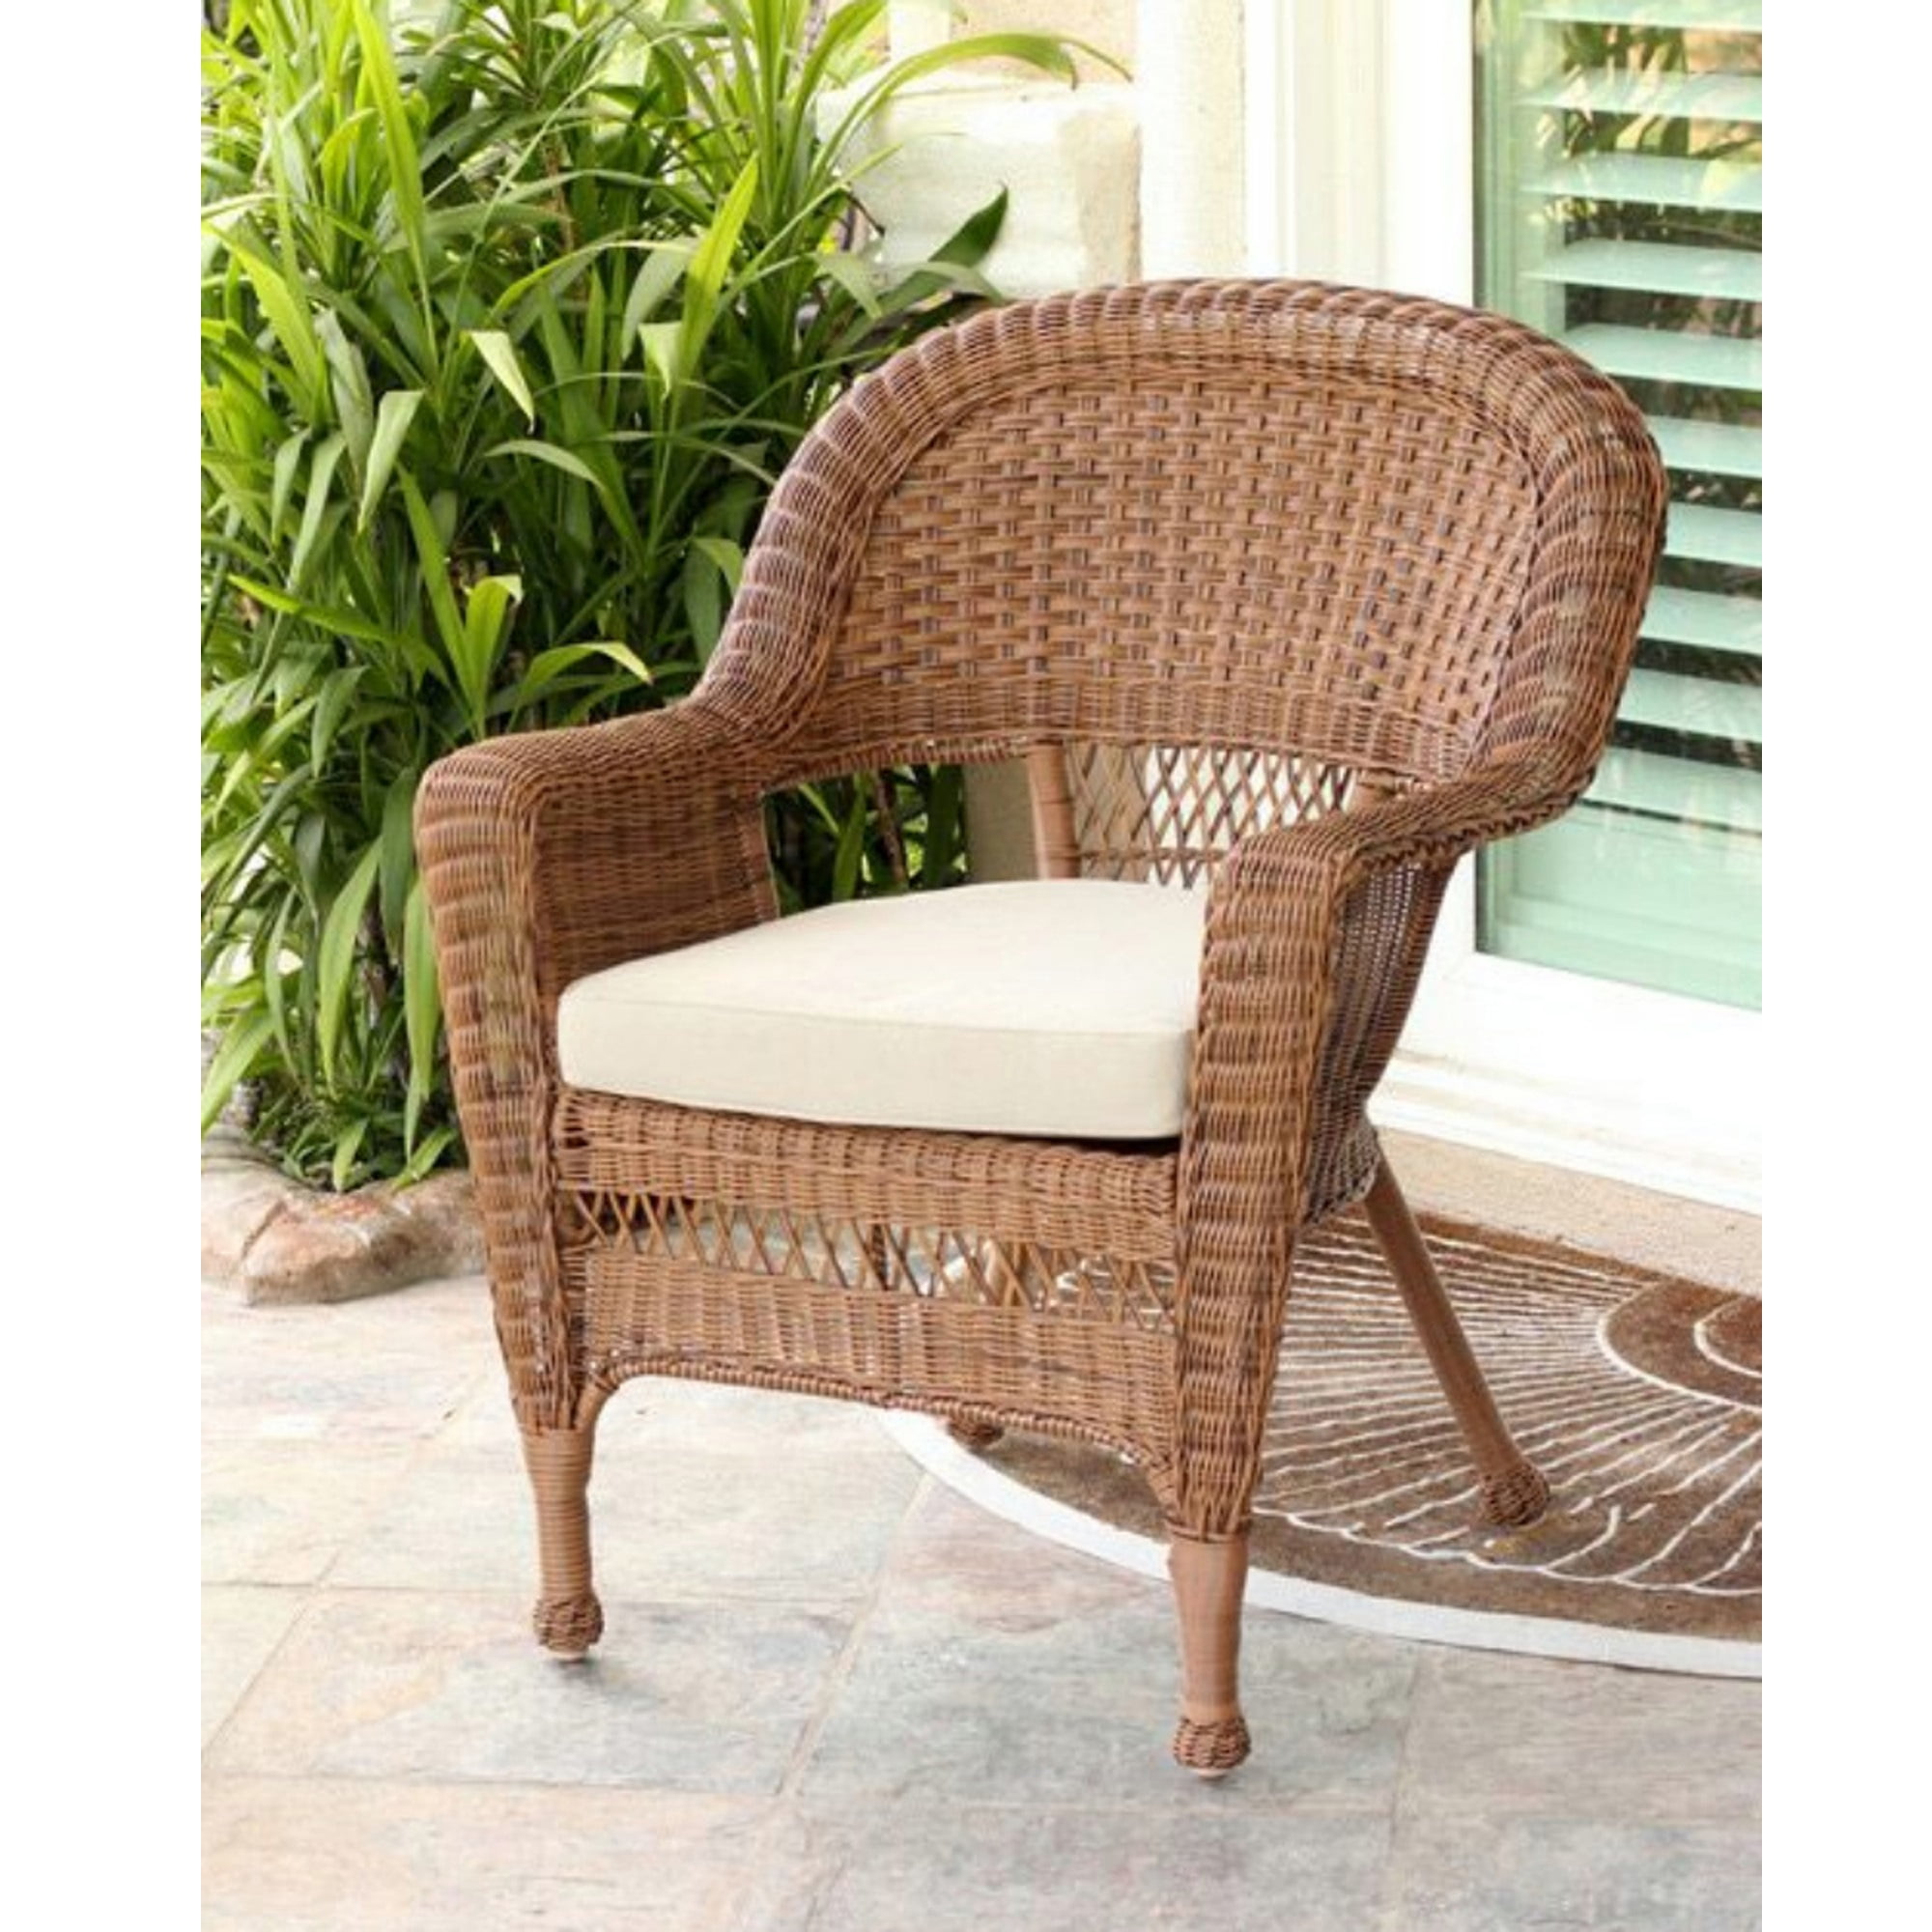 36" Honey Brown Resin Wicker Outdoor Patio Garden Chair with Tan